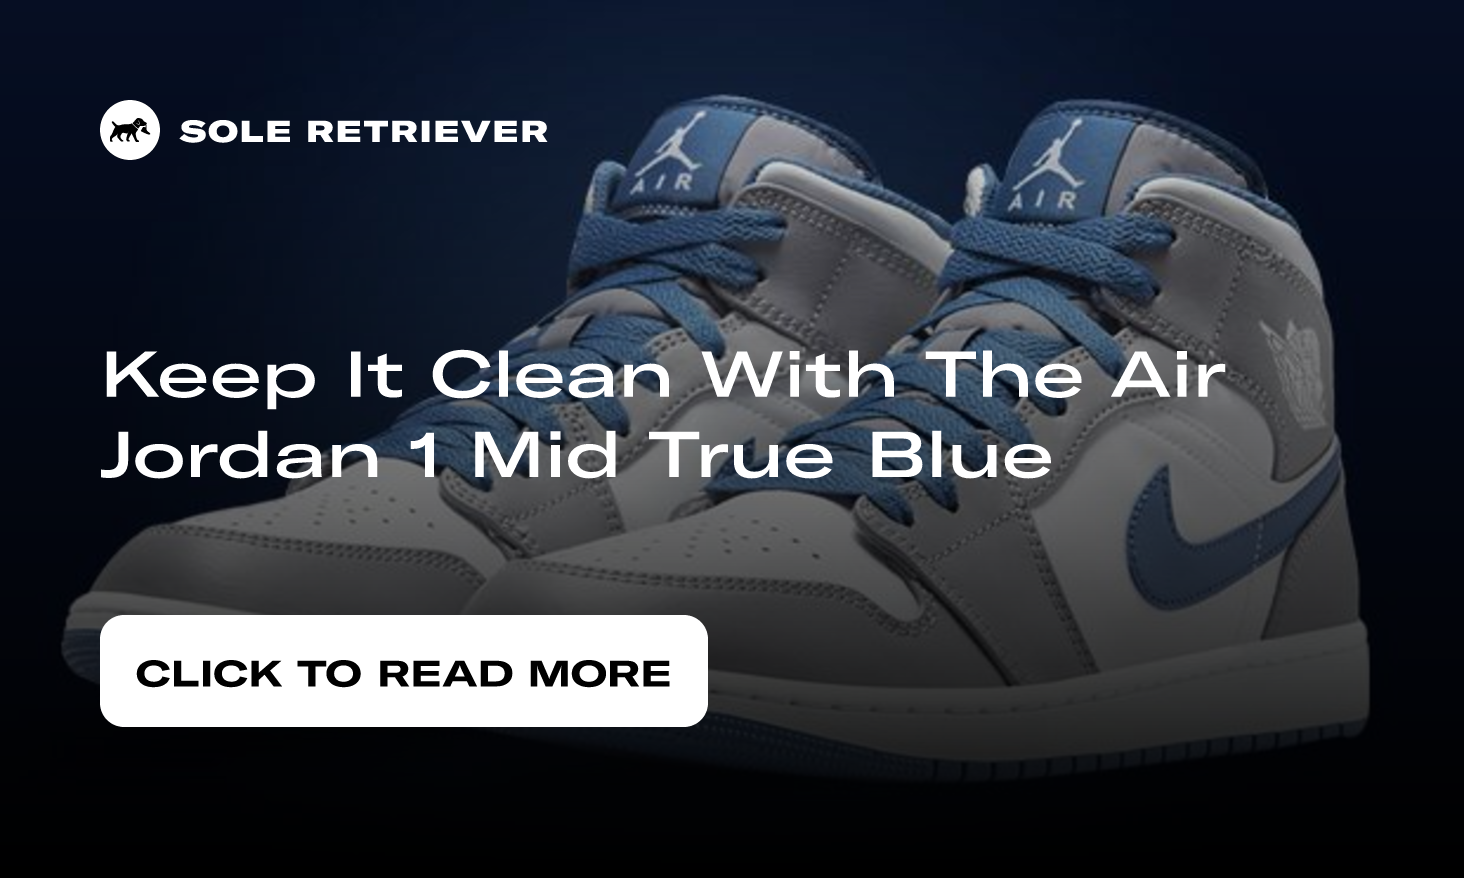 Air Jordan 1 Mid True Blue Has a Fall Release Date